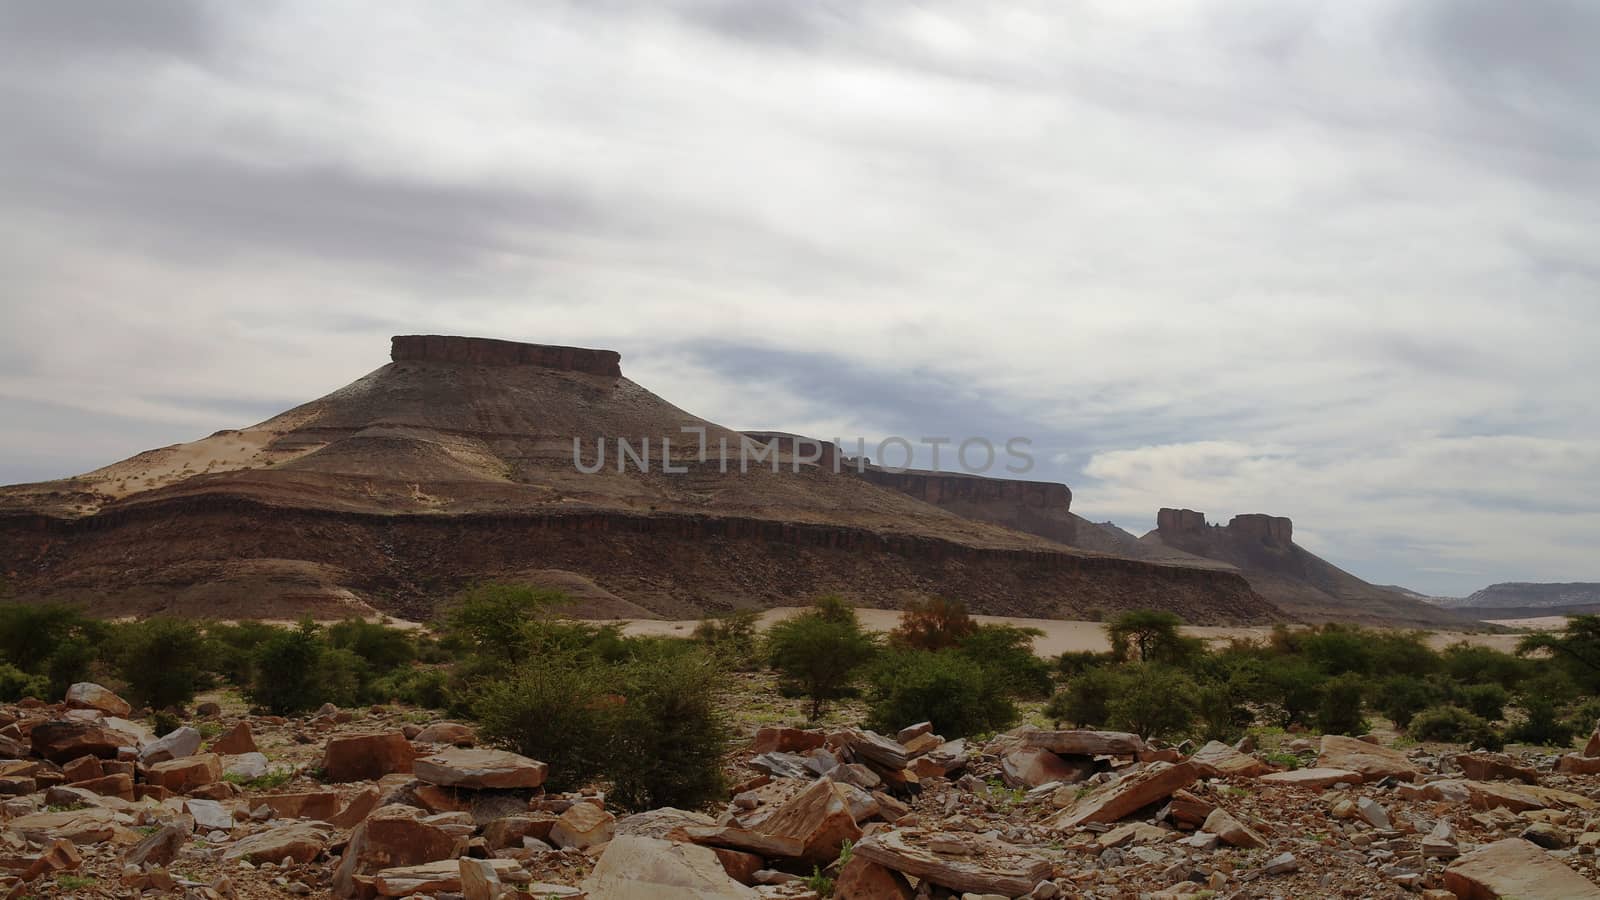 Landscape with Adrar mountain, rocks and desert, Mauritania